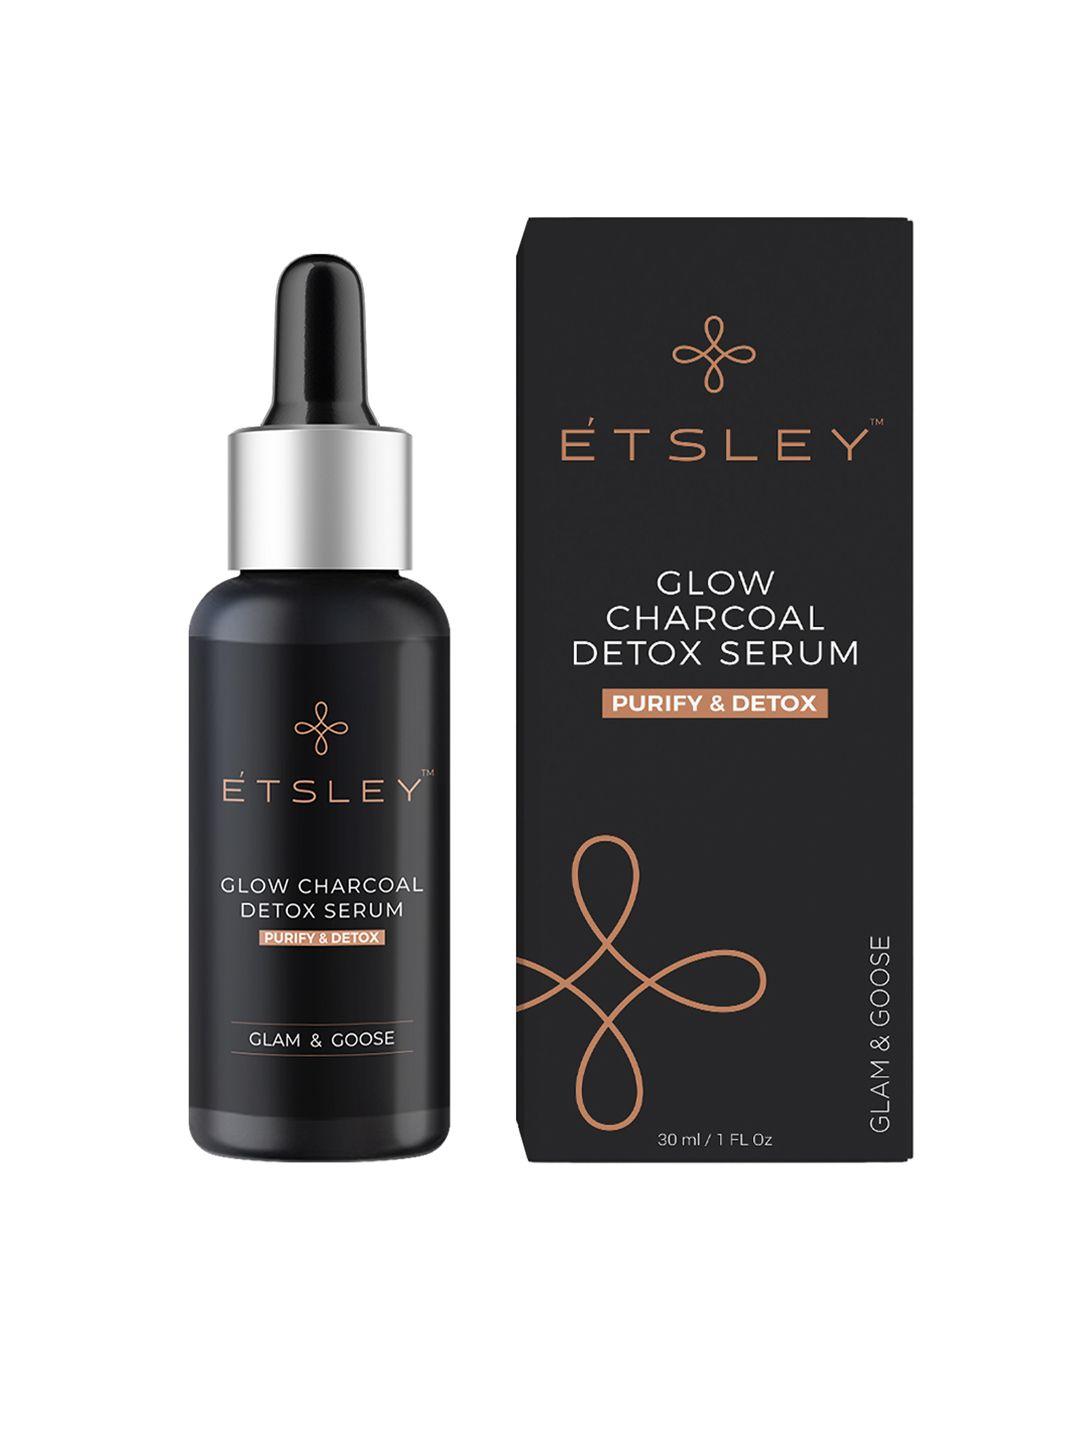 etsley glow charcoal detox serum purify & detox serum